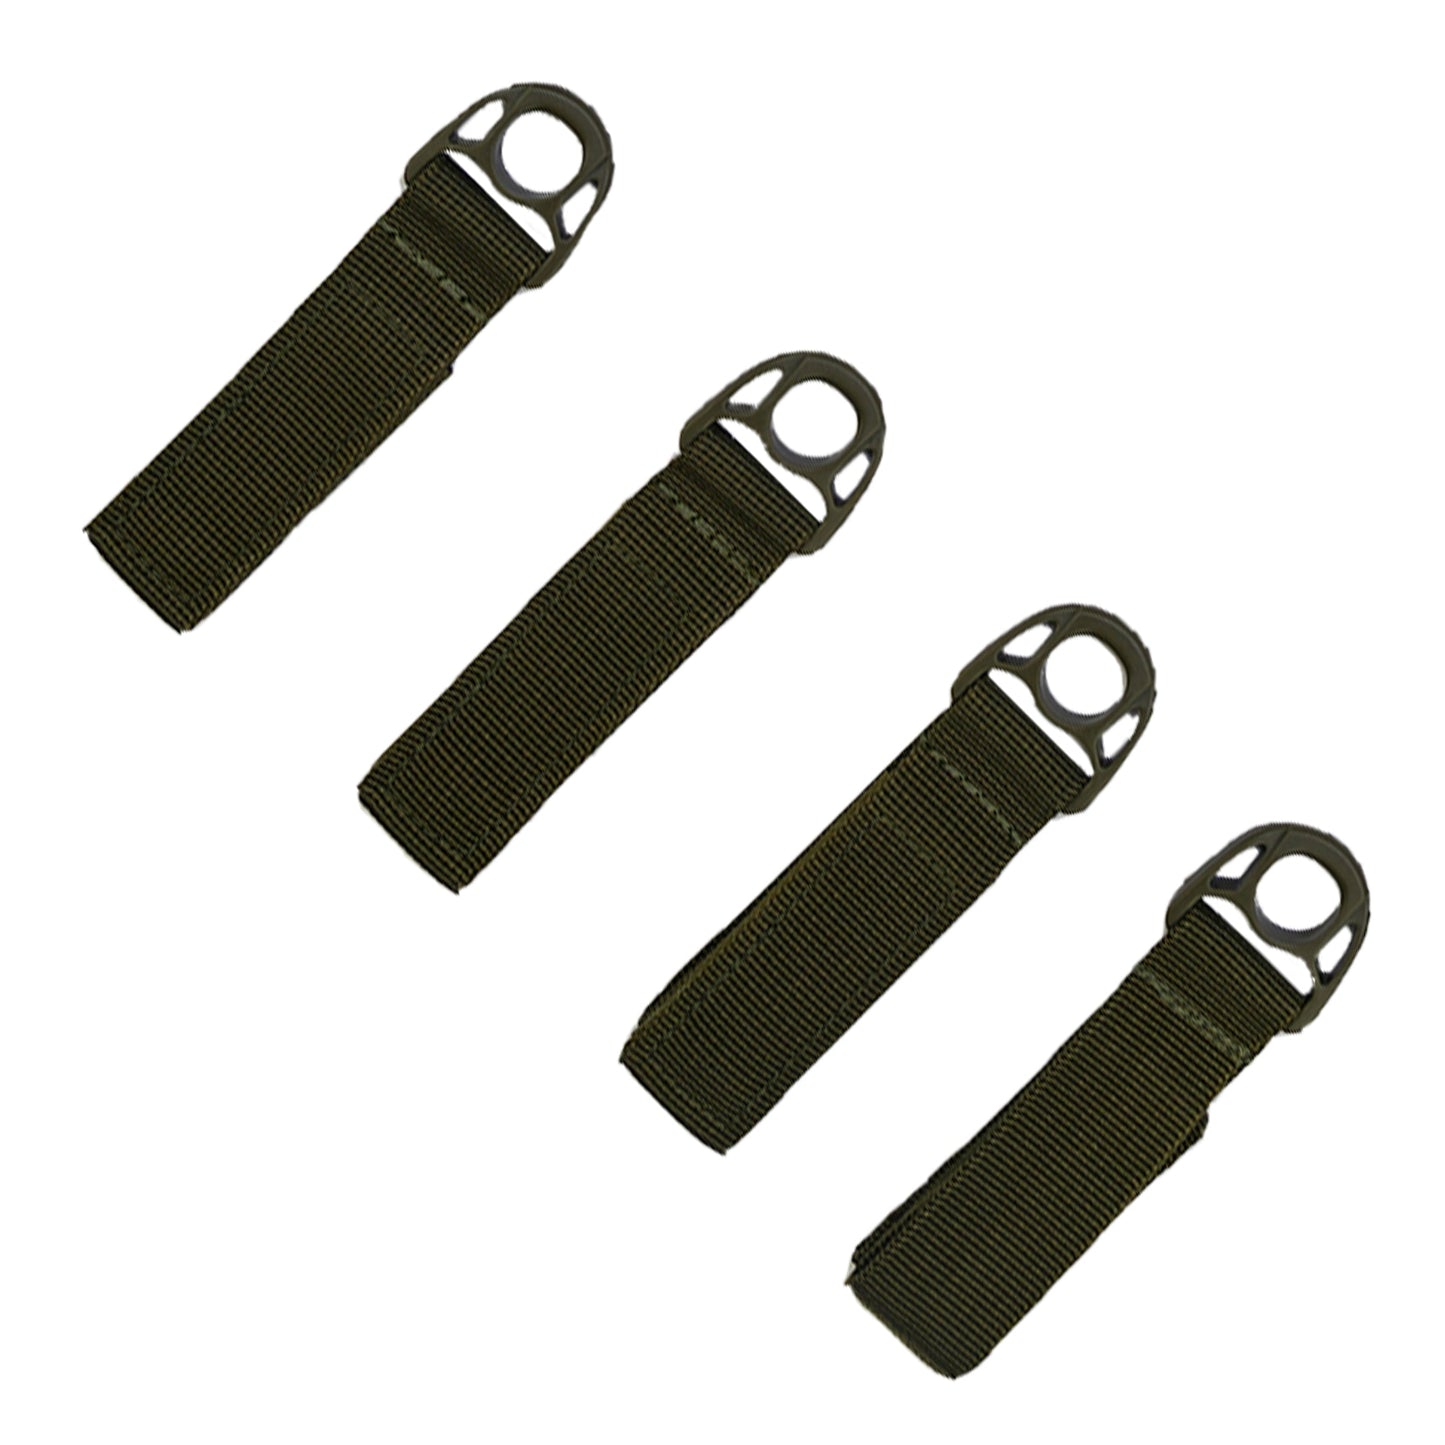 MeloTough Tactical Suspenders Duty Belt Harness Padded Adjustable Tool Belt Suspenders with Key Holder